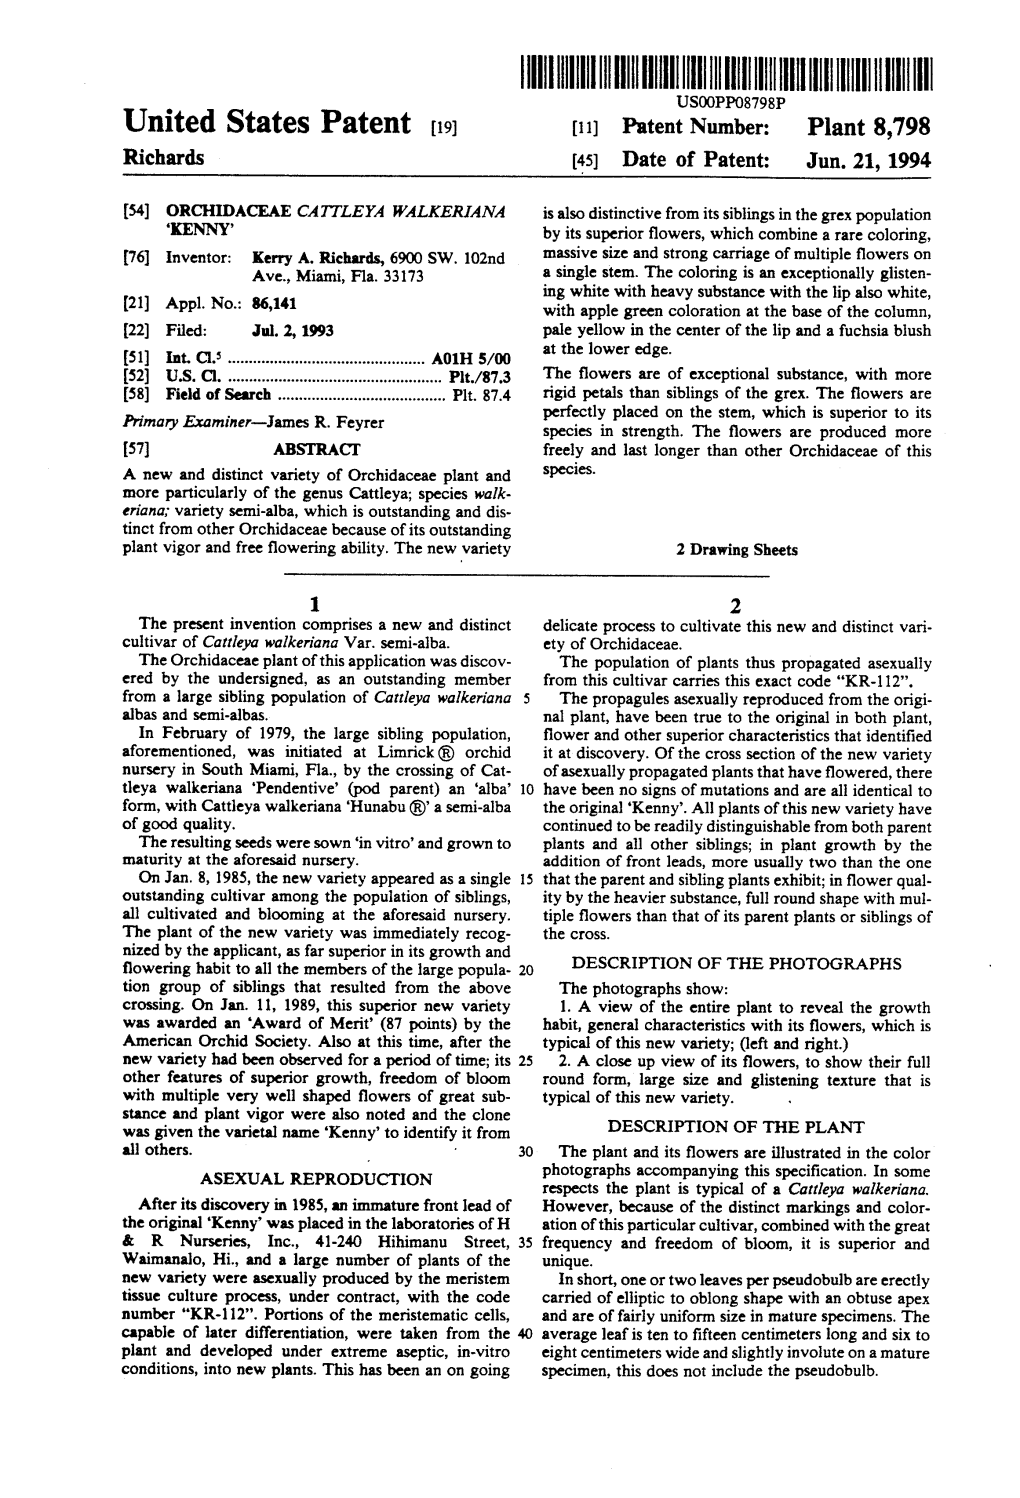 IIIHHHH|H||||| USOOPPO8798P United States Patent (19) (11) Patent Number: Plant 8,798 Richards (45) Date of Patent: Jun